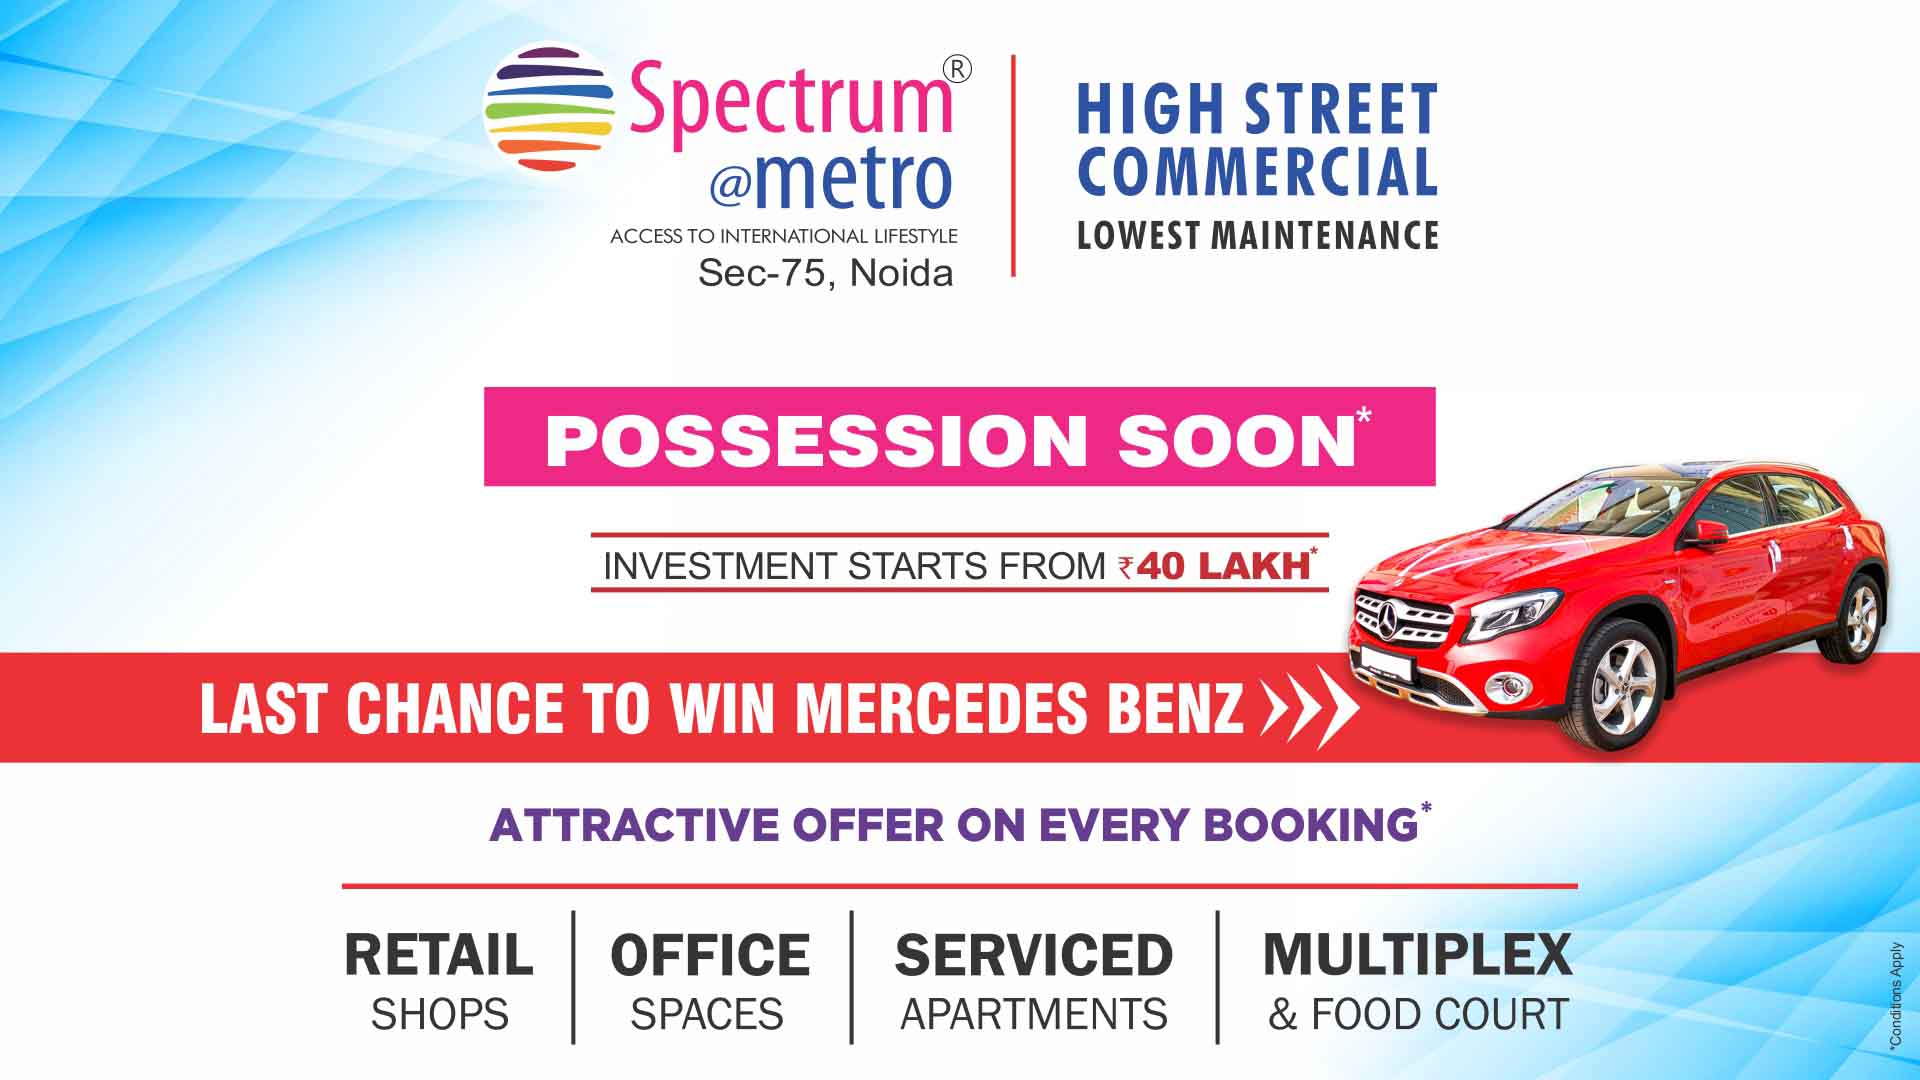 spectrum metro possession soon